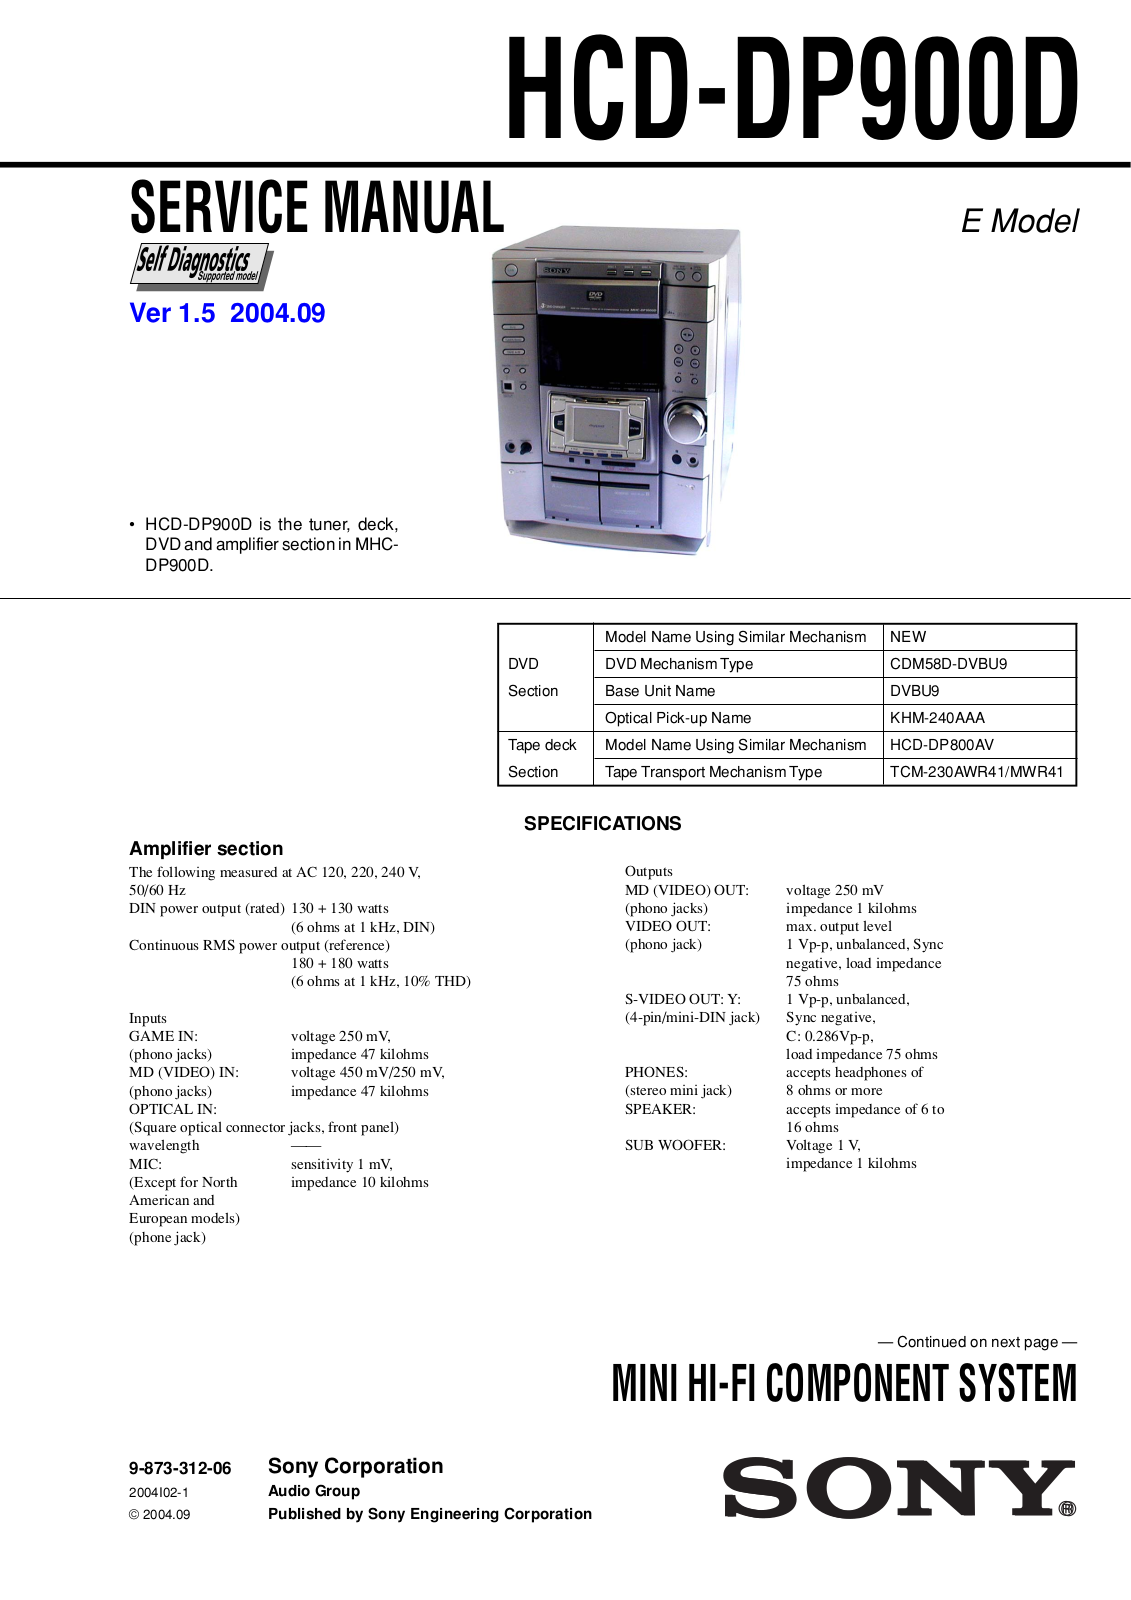 Sony HCD-DP900D Service Manual